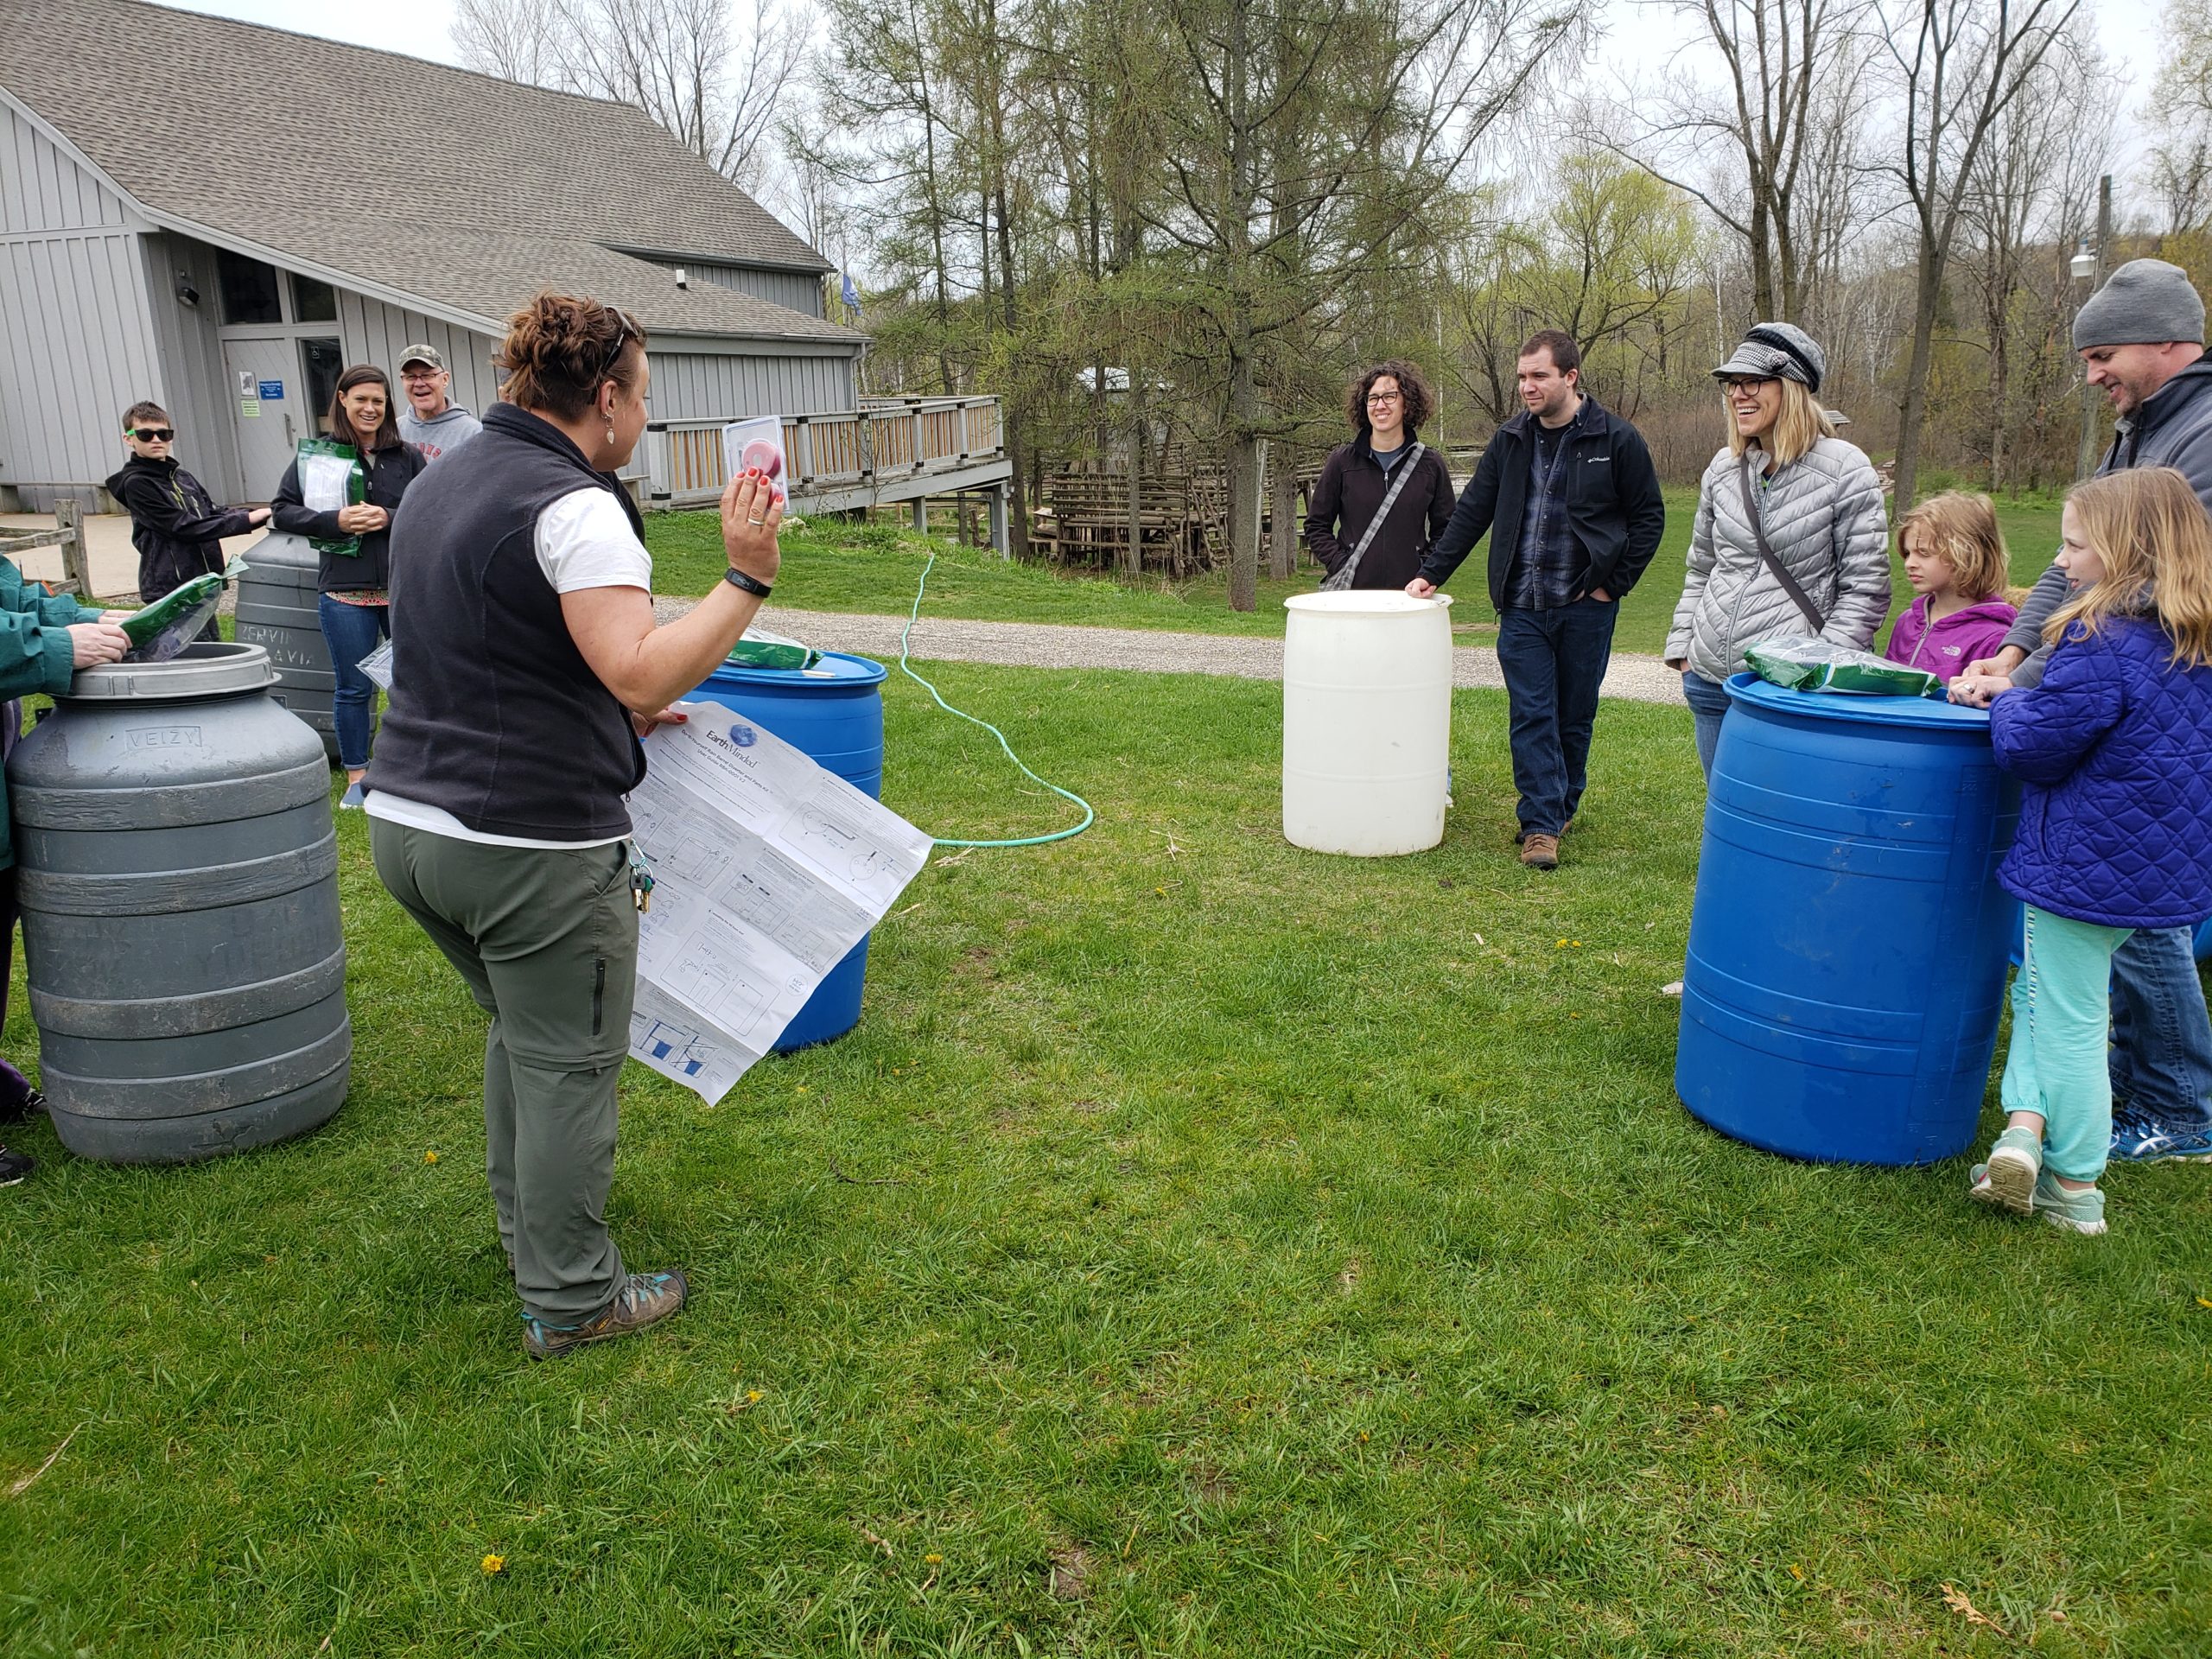 Riveredge educator teaching rain barrel workshop to a group of people outside